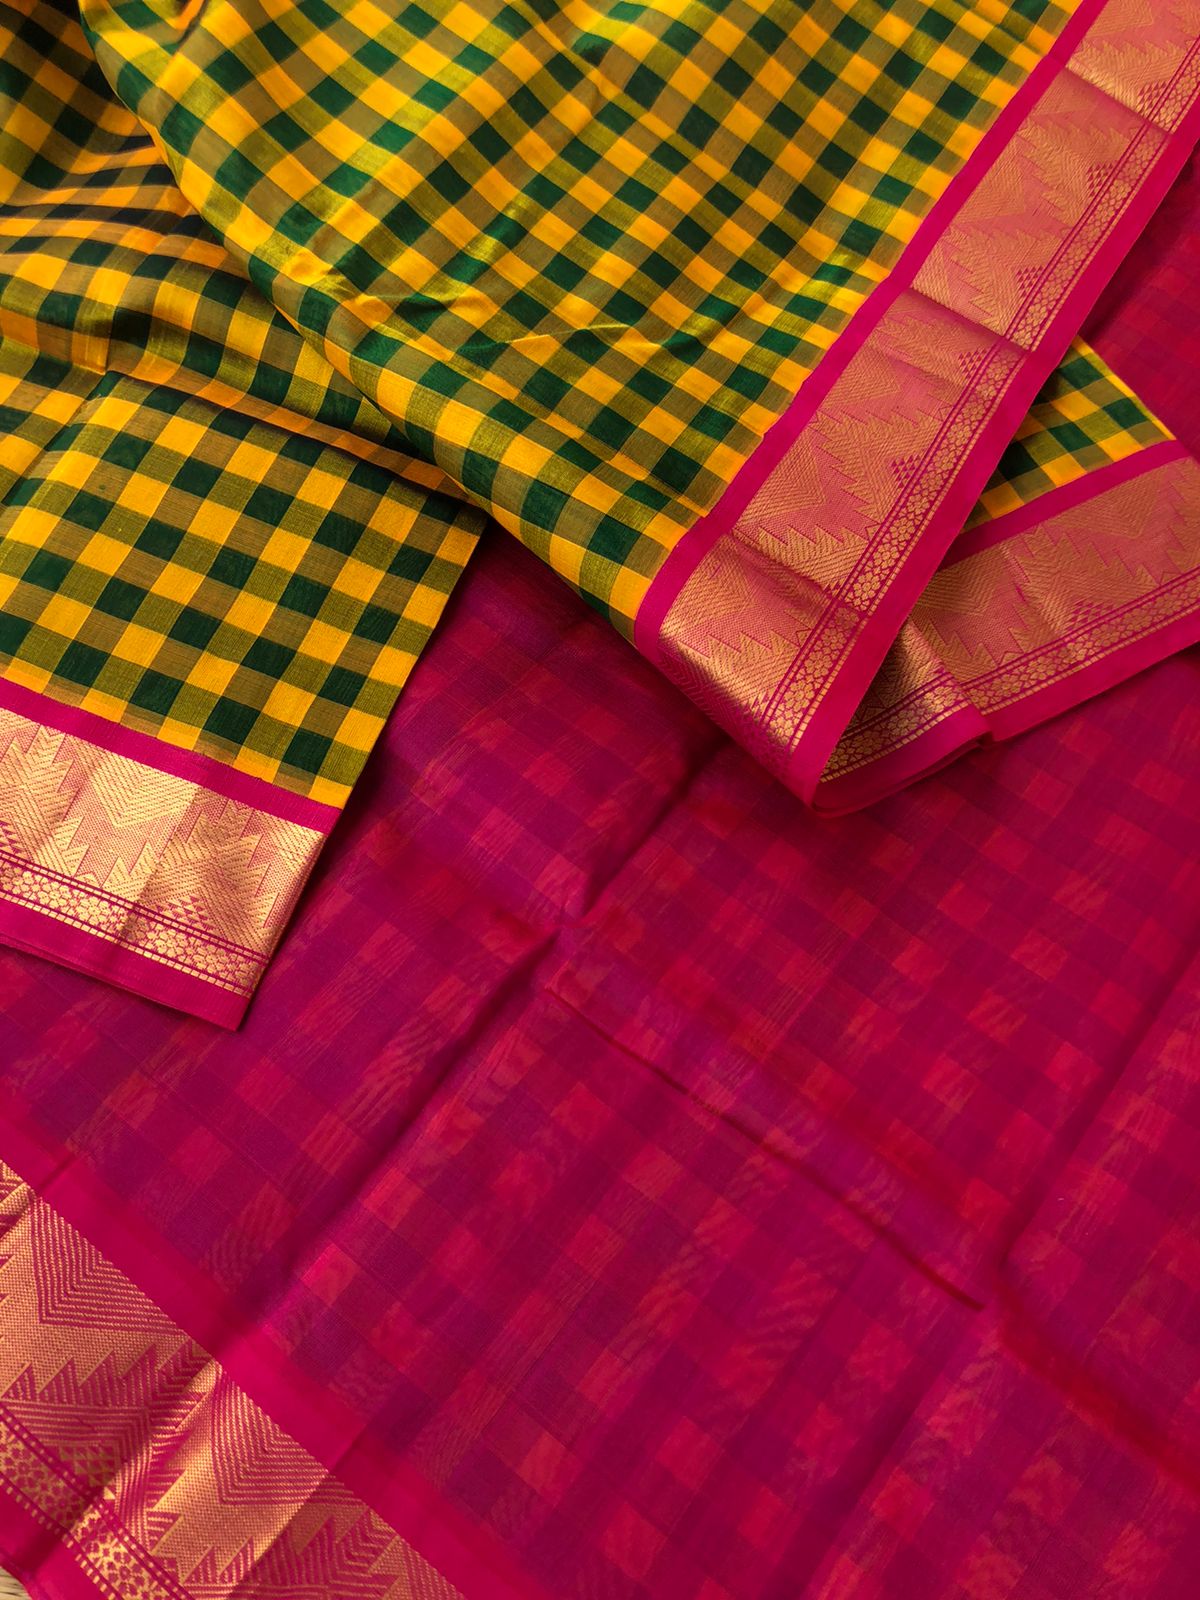 Paalum palamum kattam on Korvai Silk Cotton - mustard and green chex with kum kum pink pallu and blouse